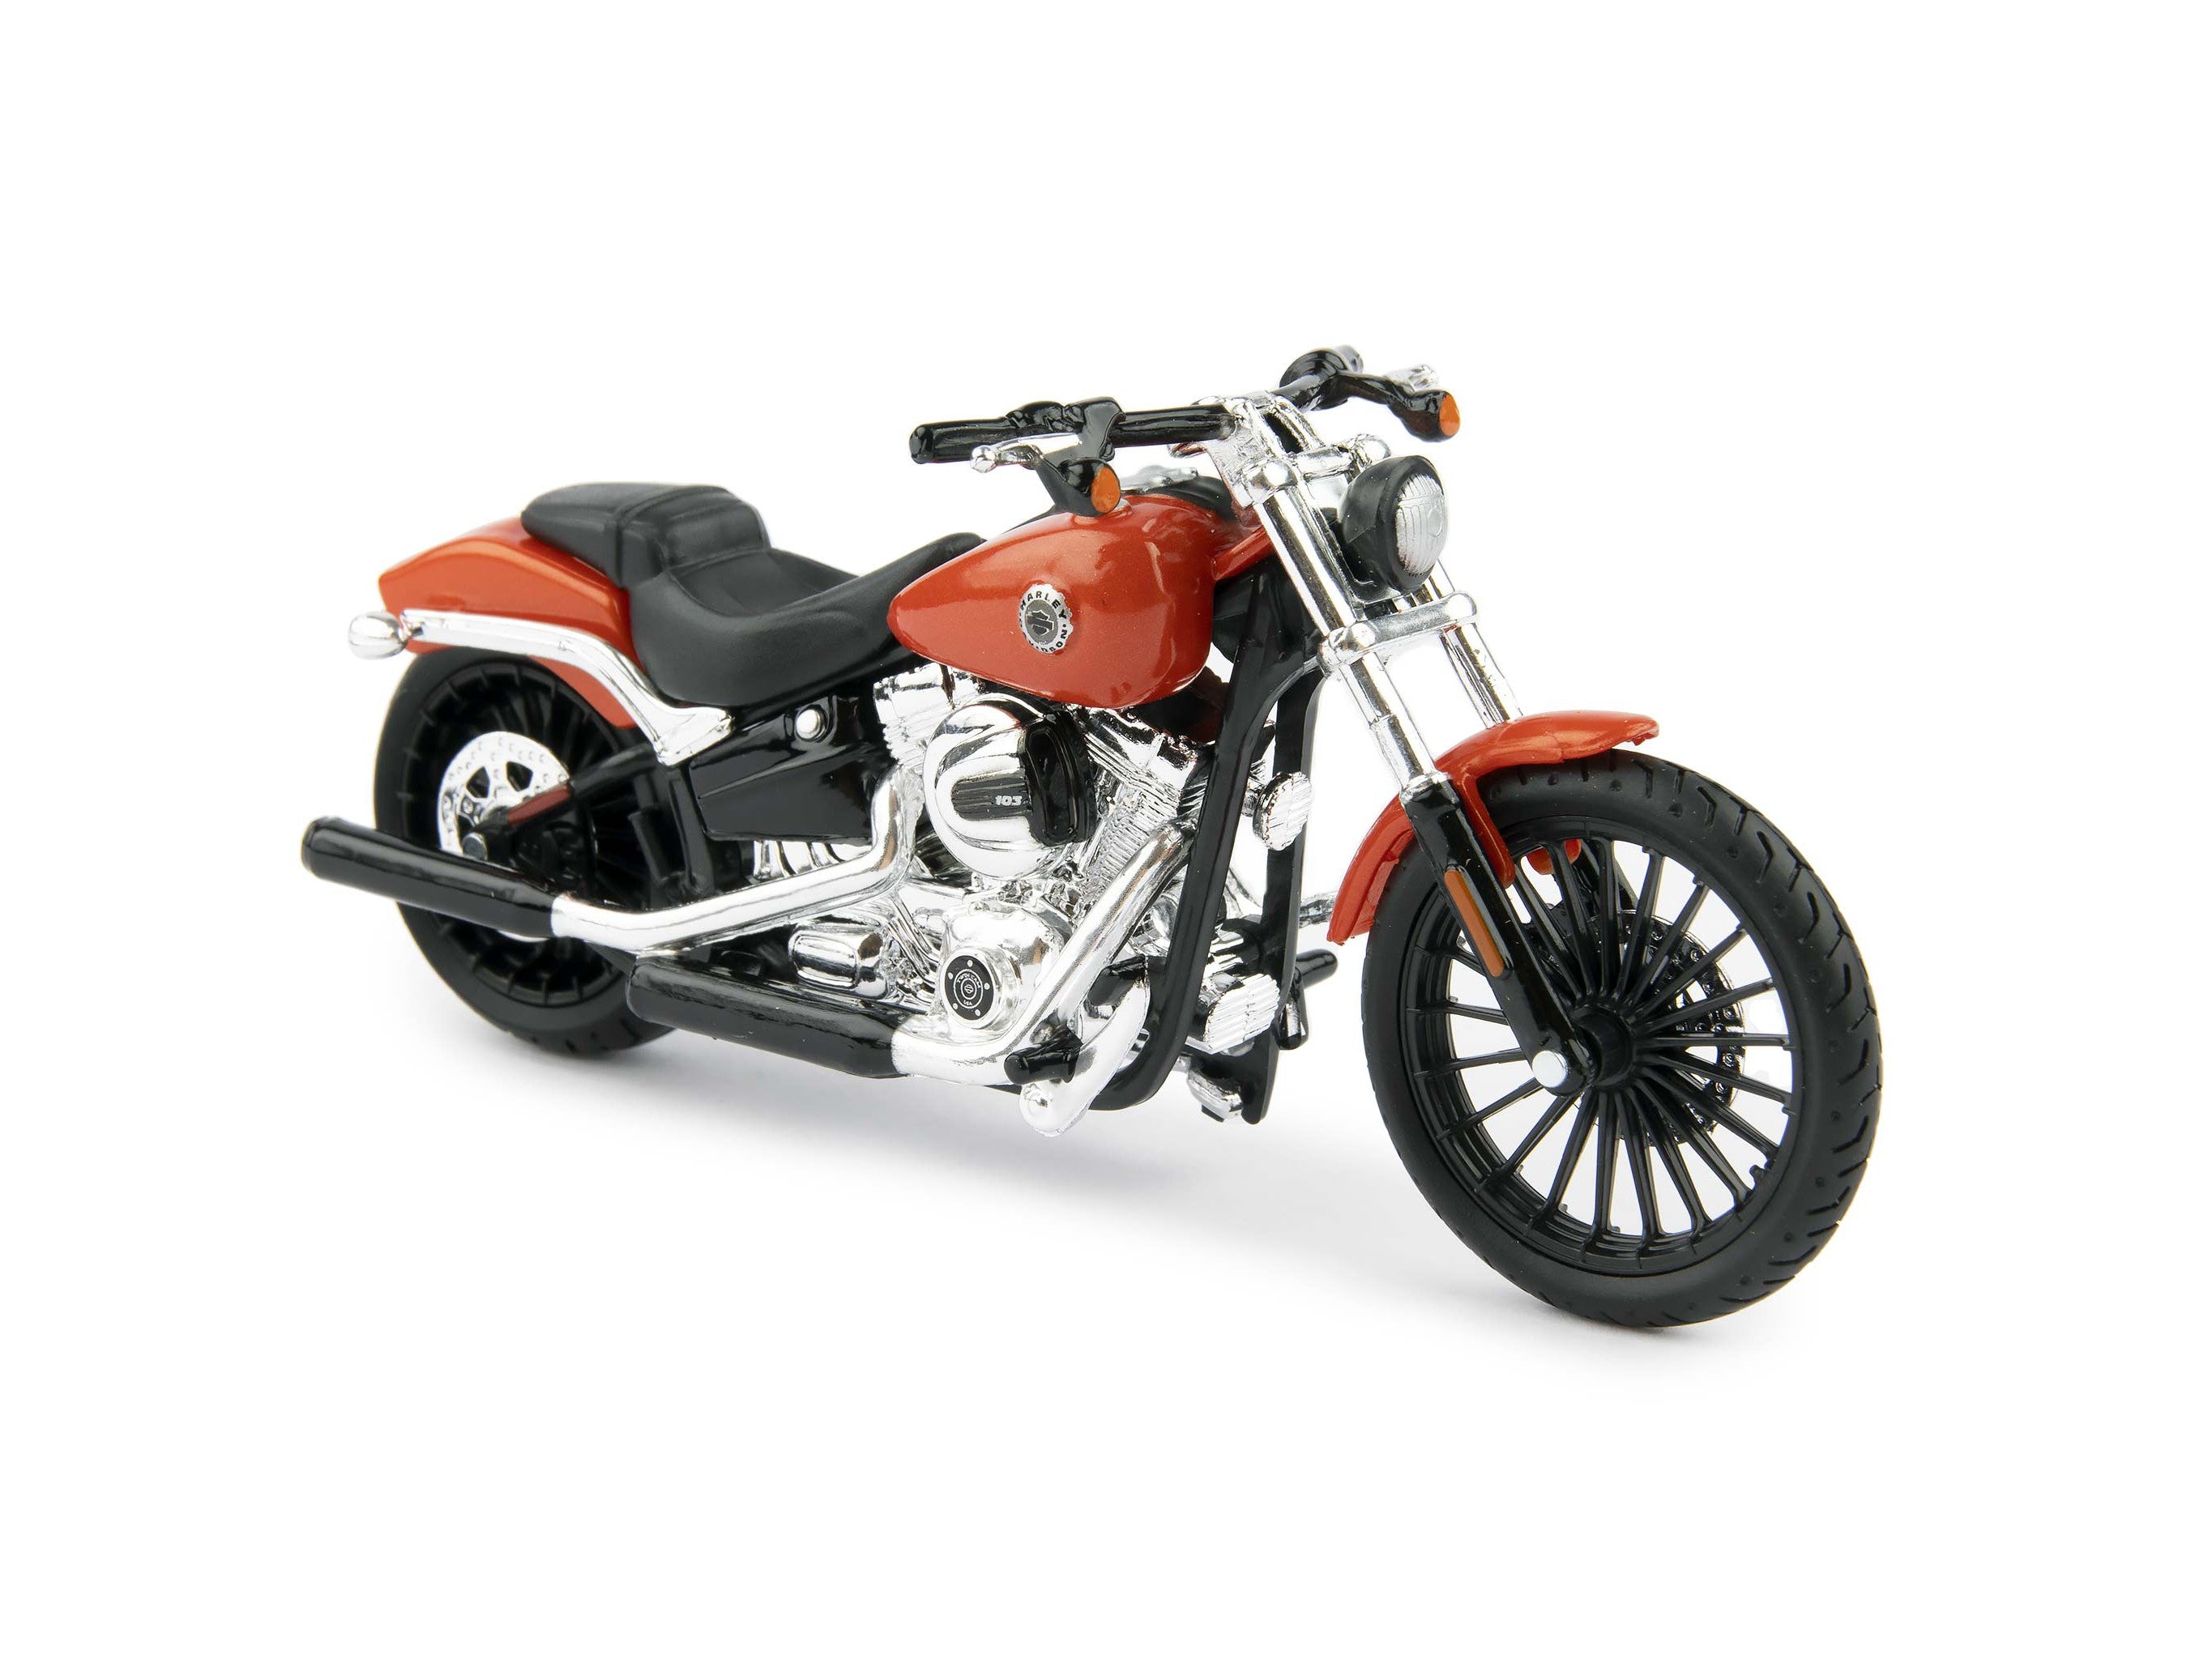 Modèle en métal Moto Harley Davidson Miniature Moto chopper à la